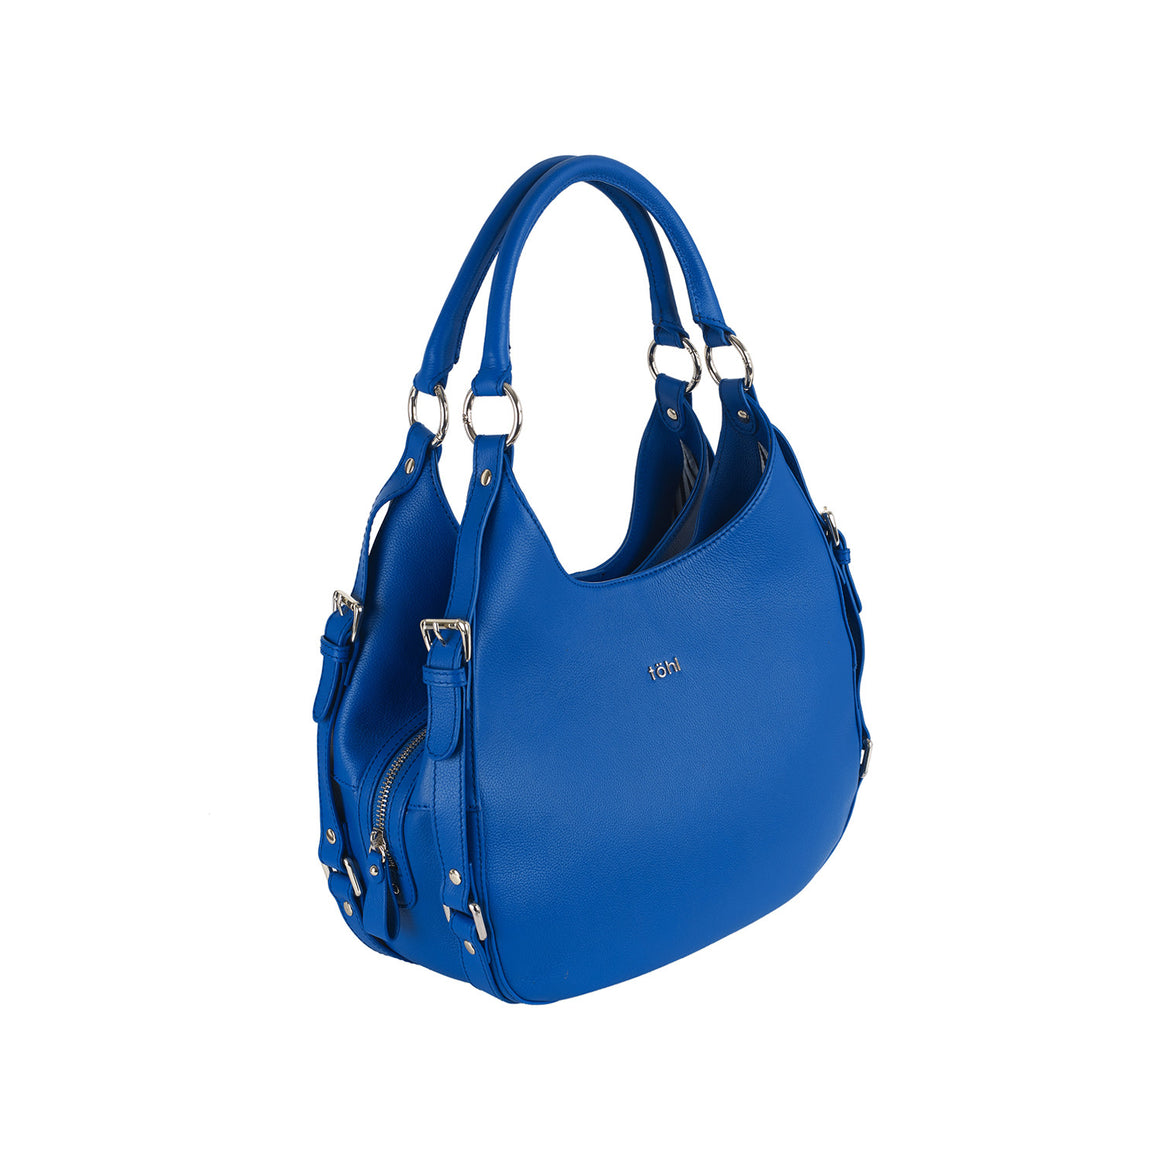 KAIA WOMEN'S SHOULDER BAG - COBALT BLUE